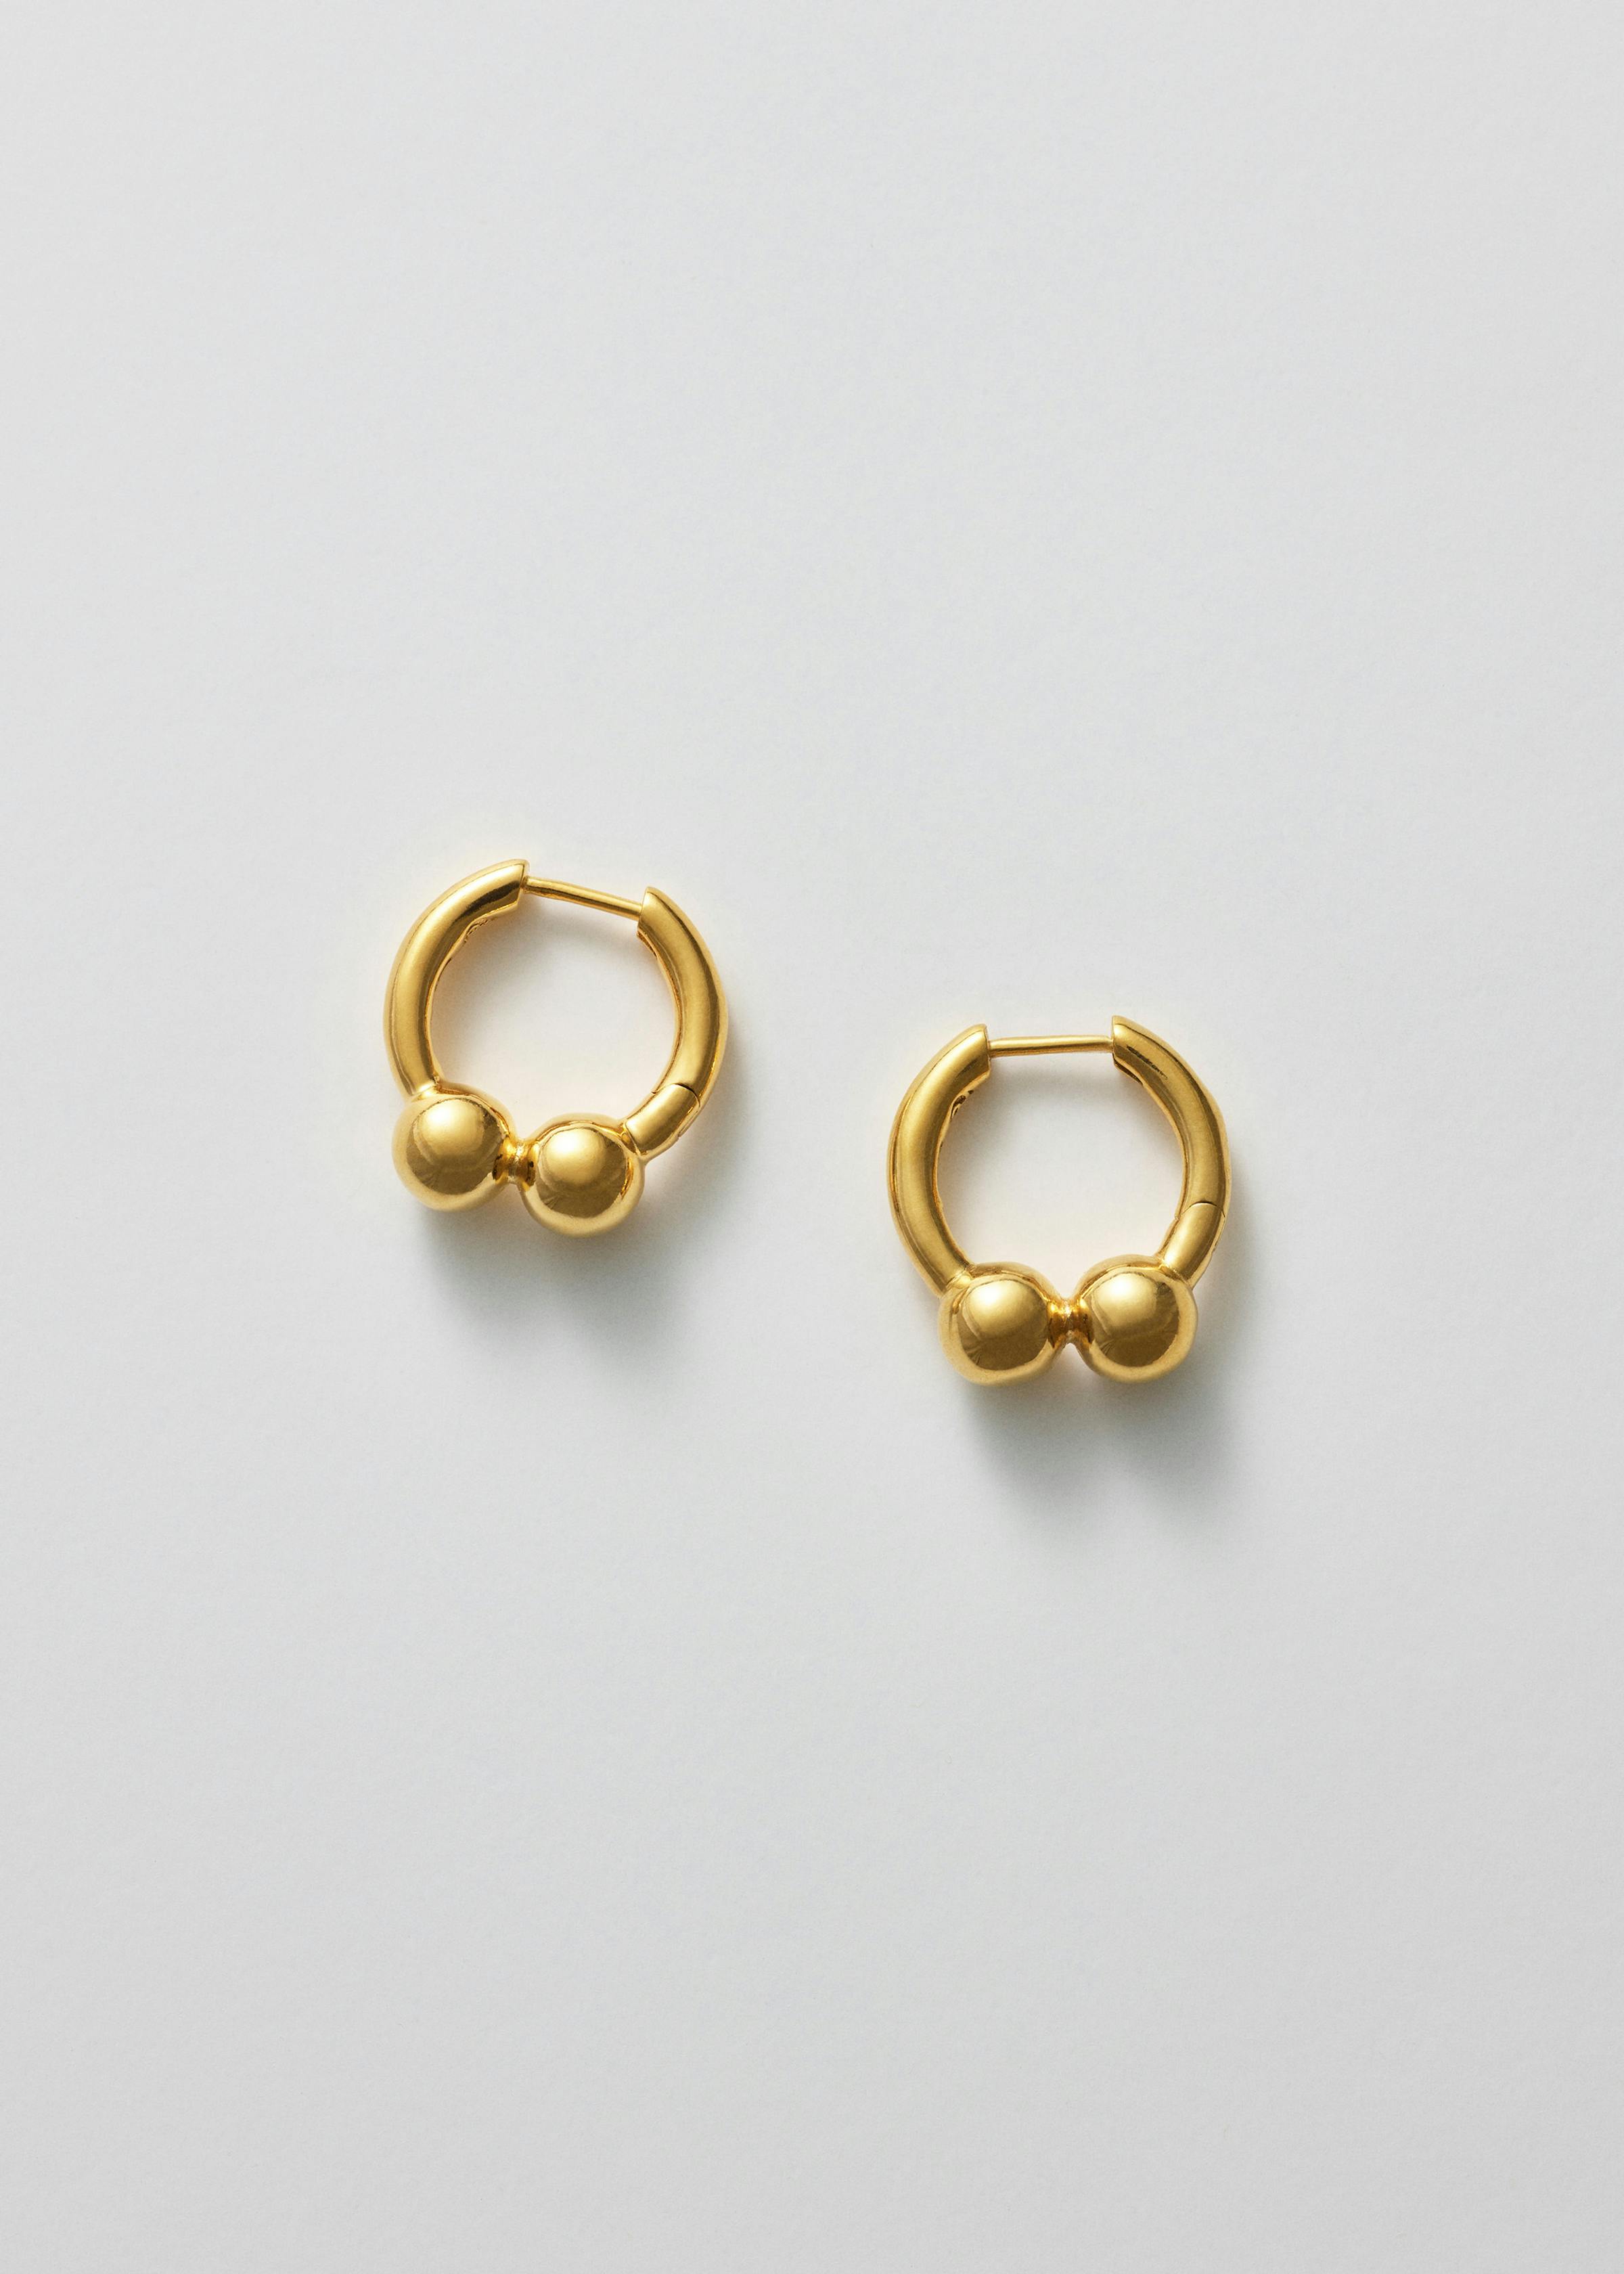 Pearl earrings two